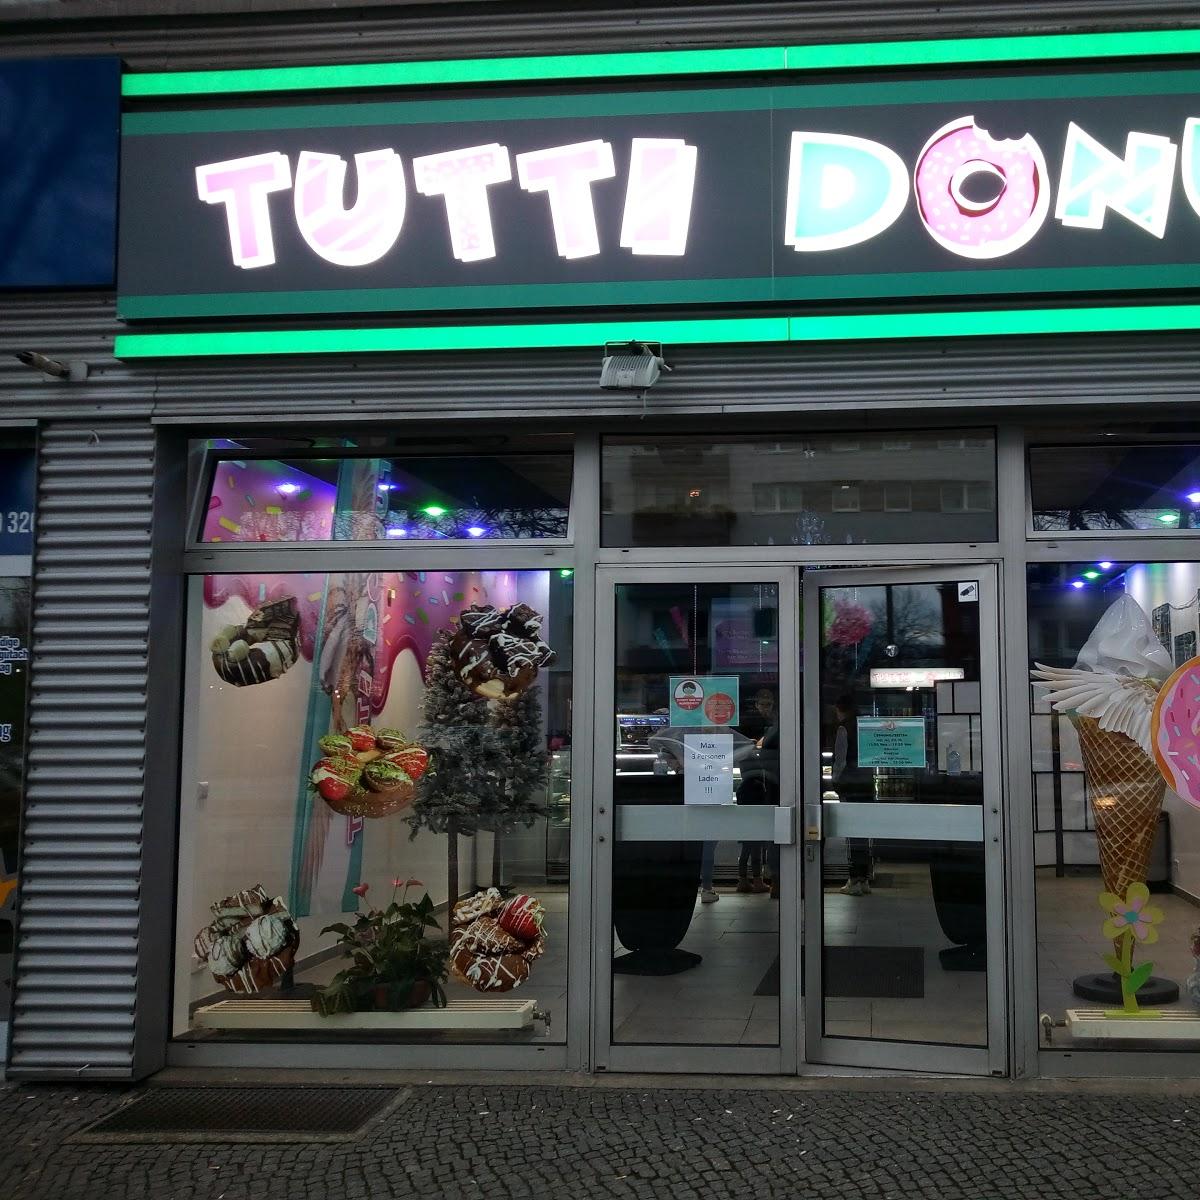 Restaurant "Tutti Donut" in Berlin